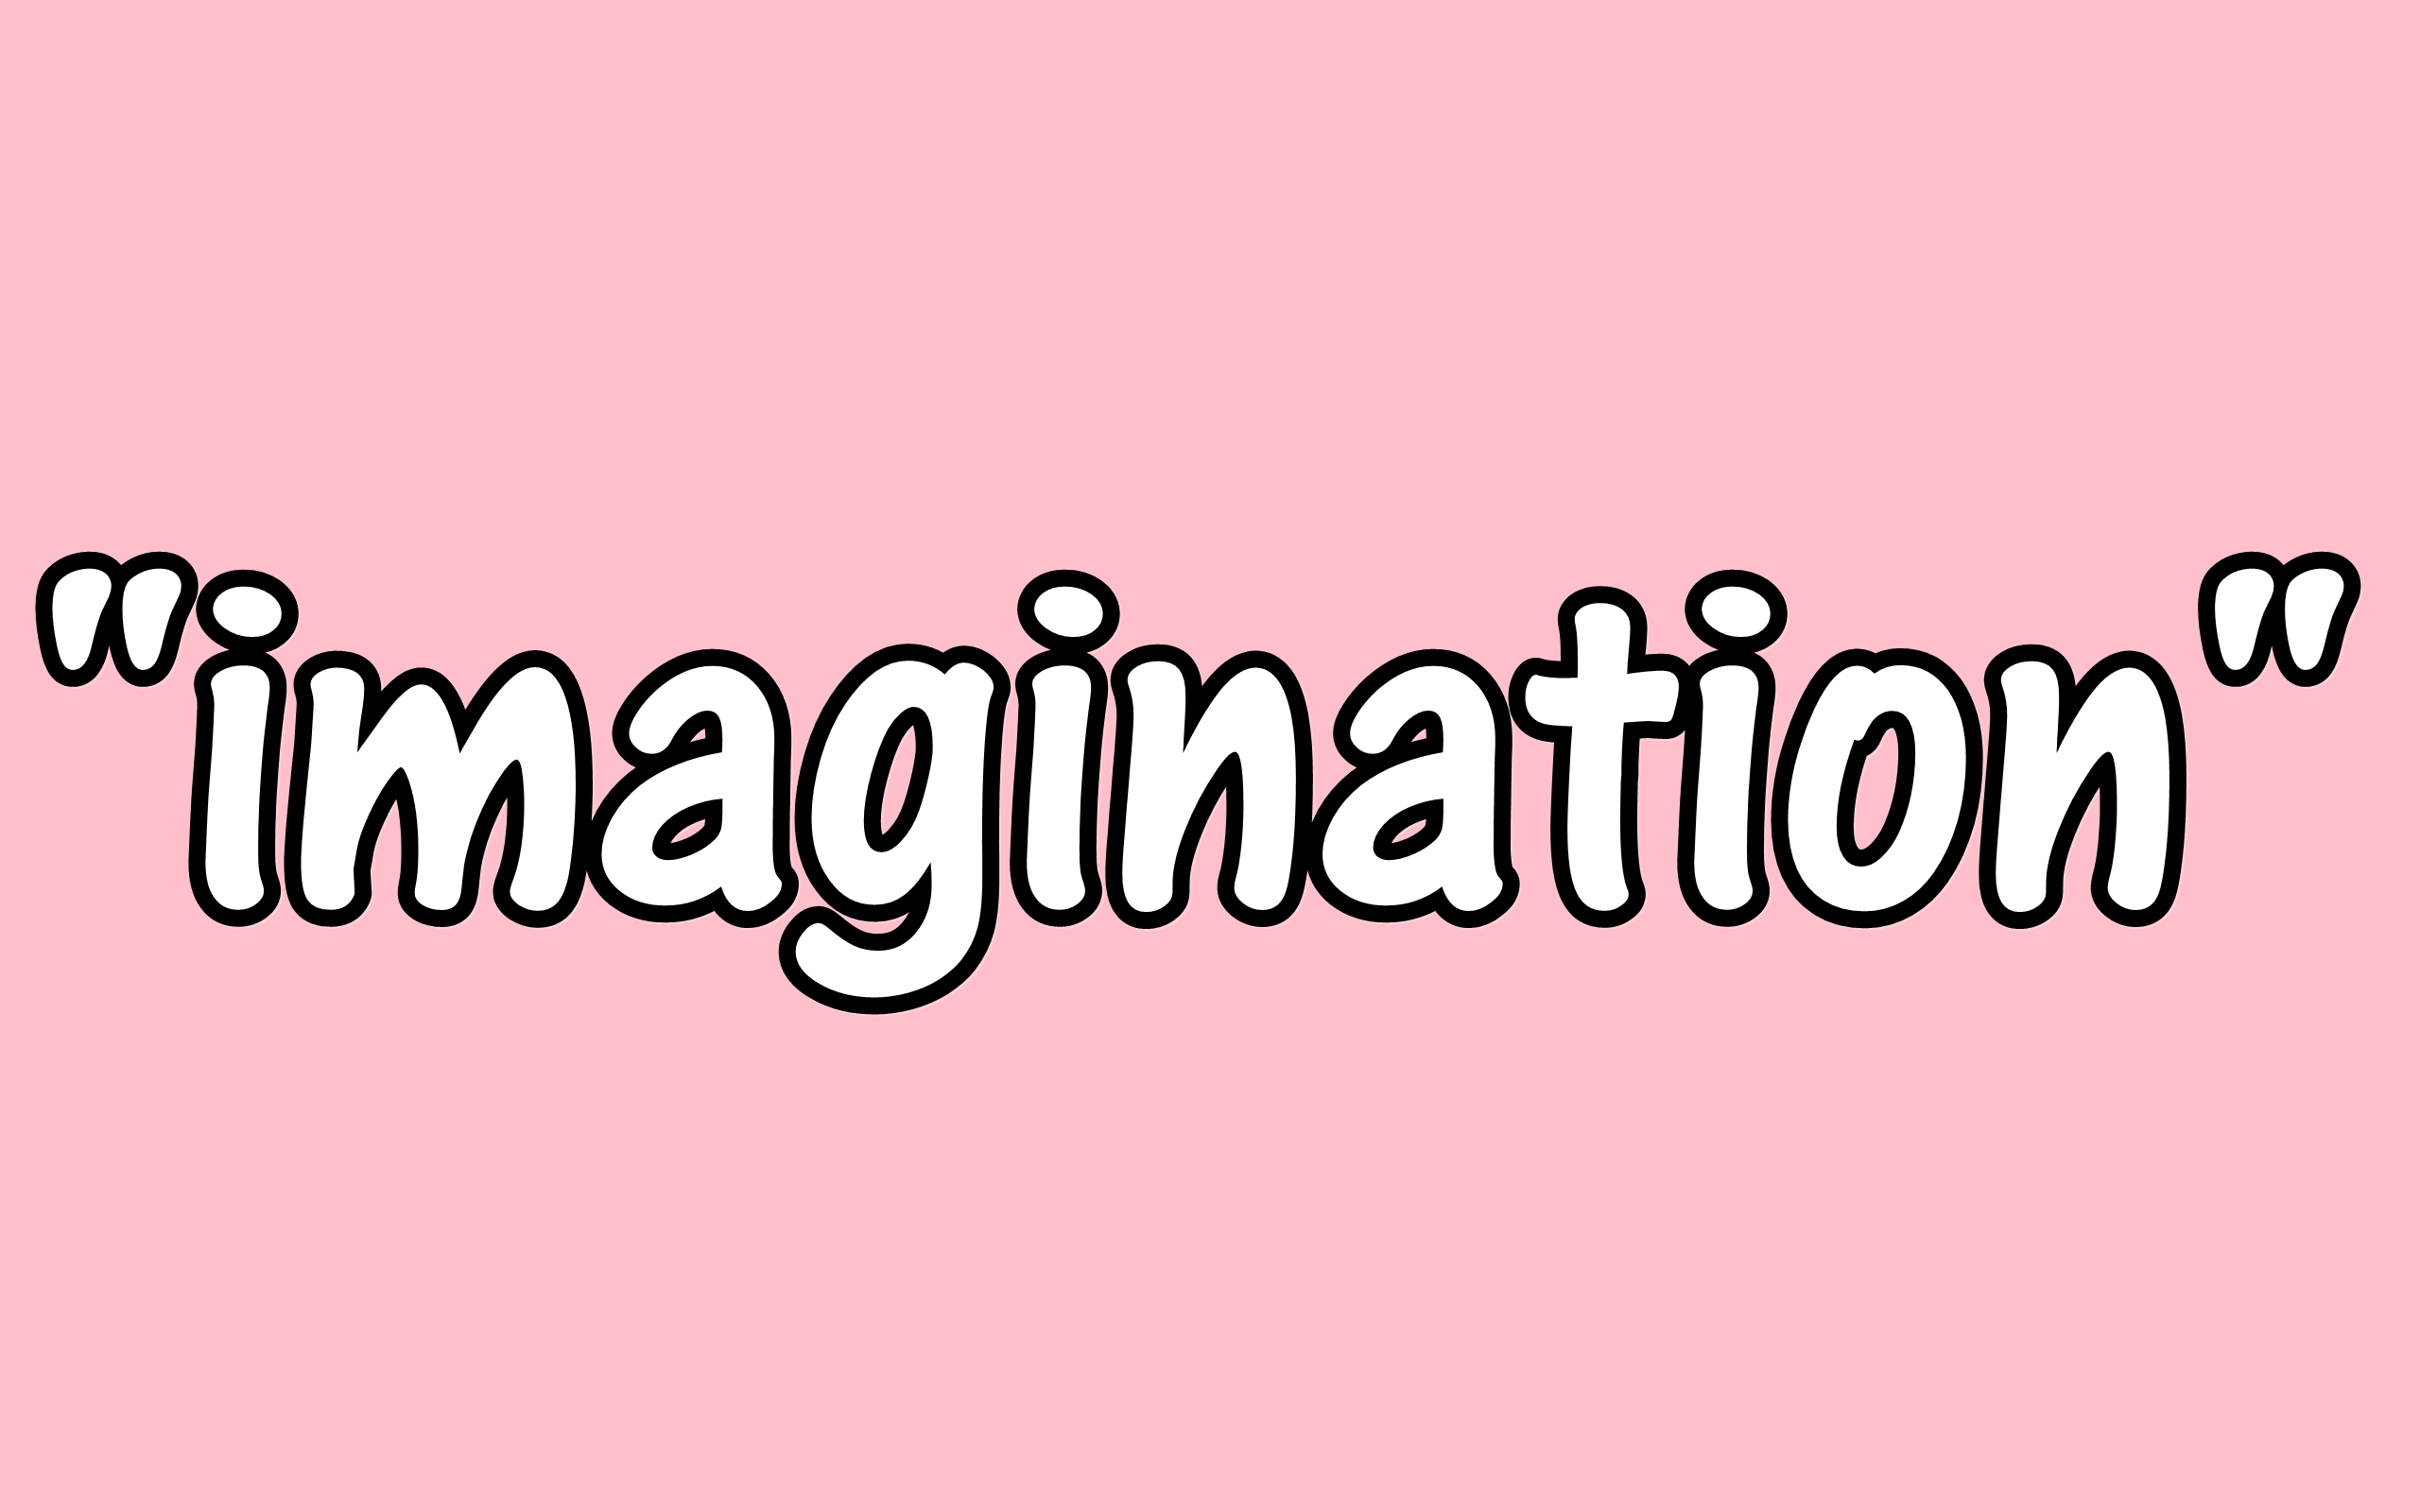 Imagination katy. Имагинатион. Imagination logo. Imagination буквами. Слово воображение на прозрачном фоне слово.